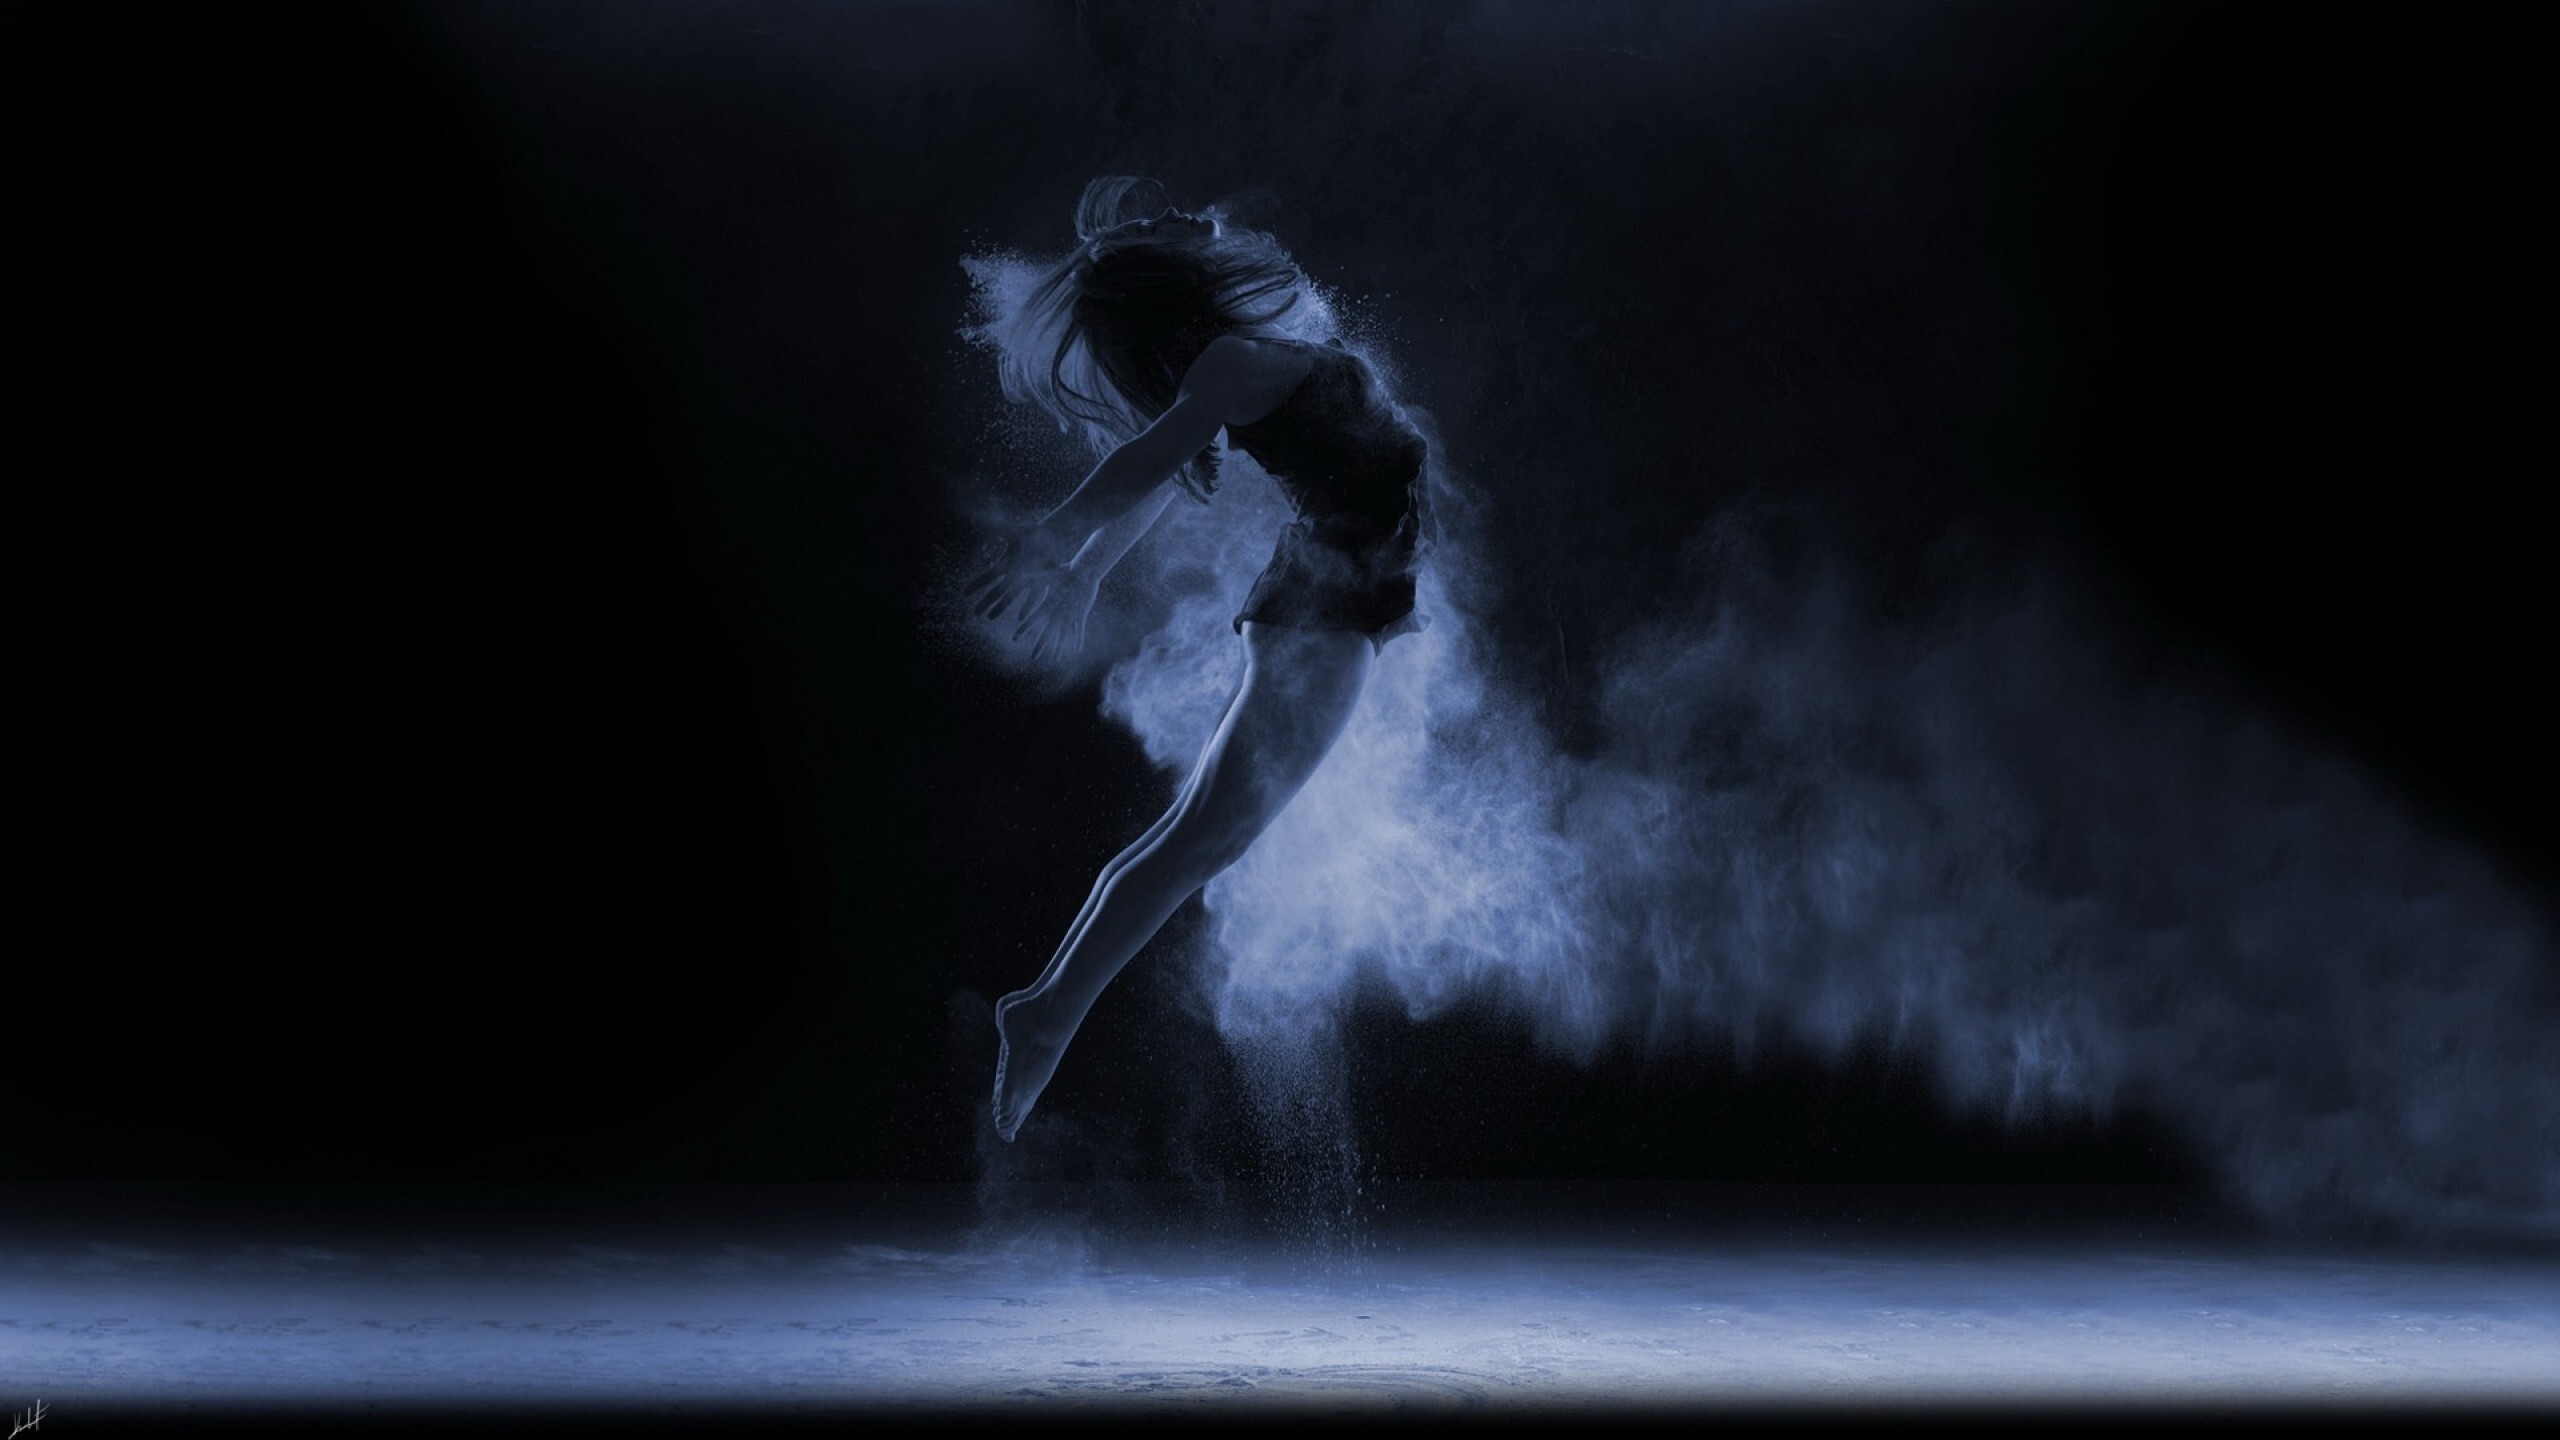 Dancing Girl in Dark High Resolution Image